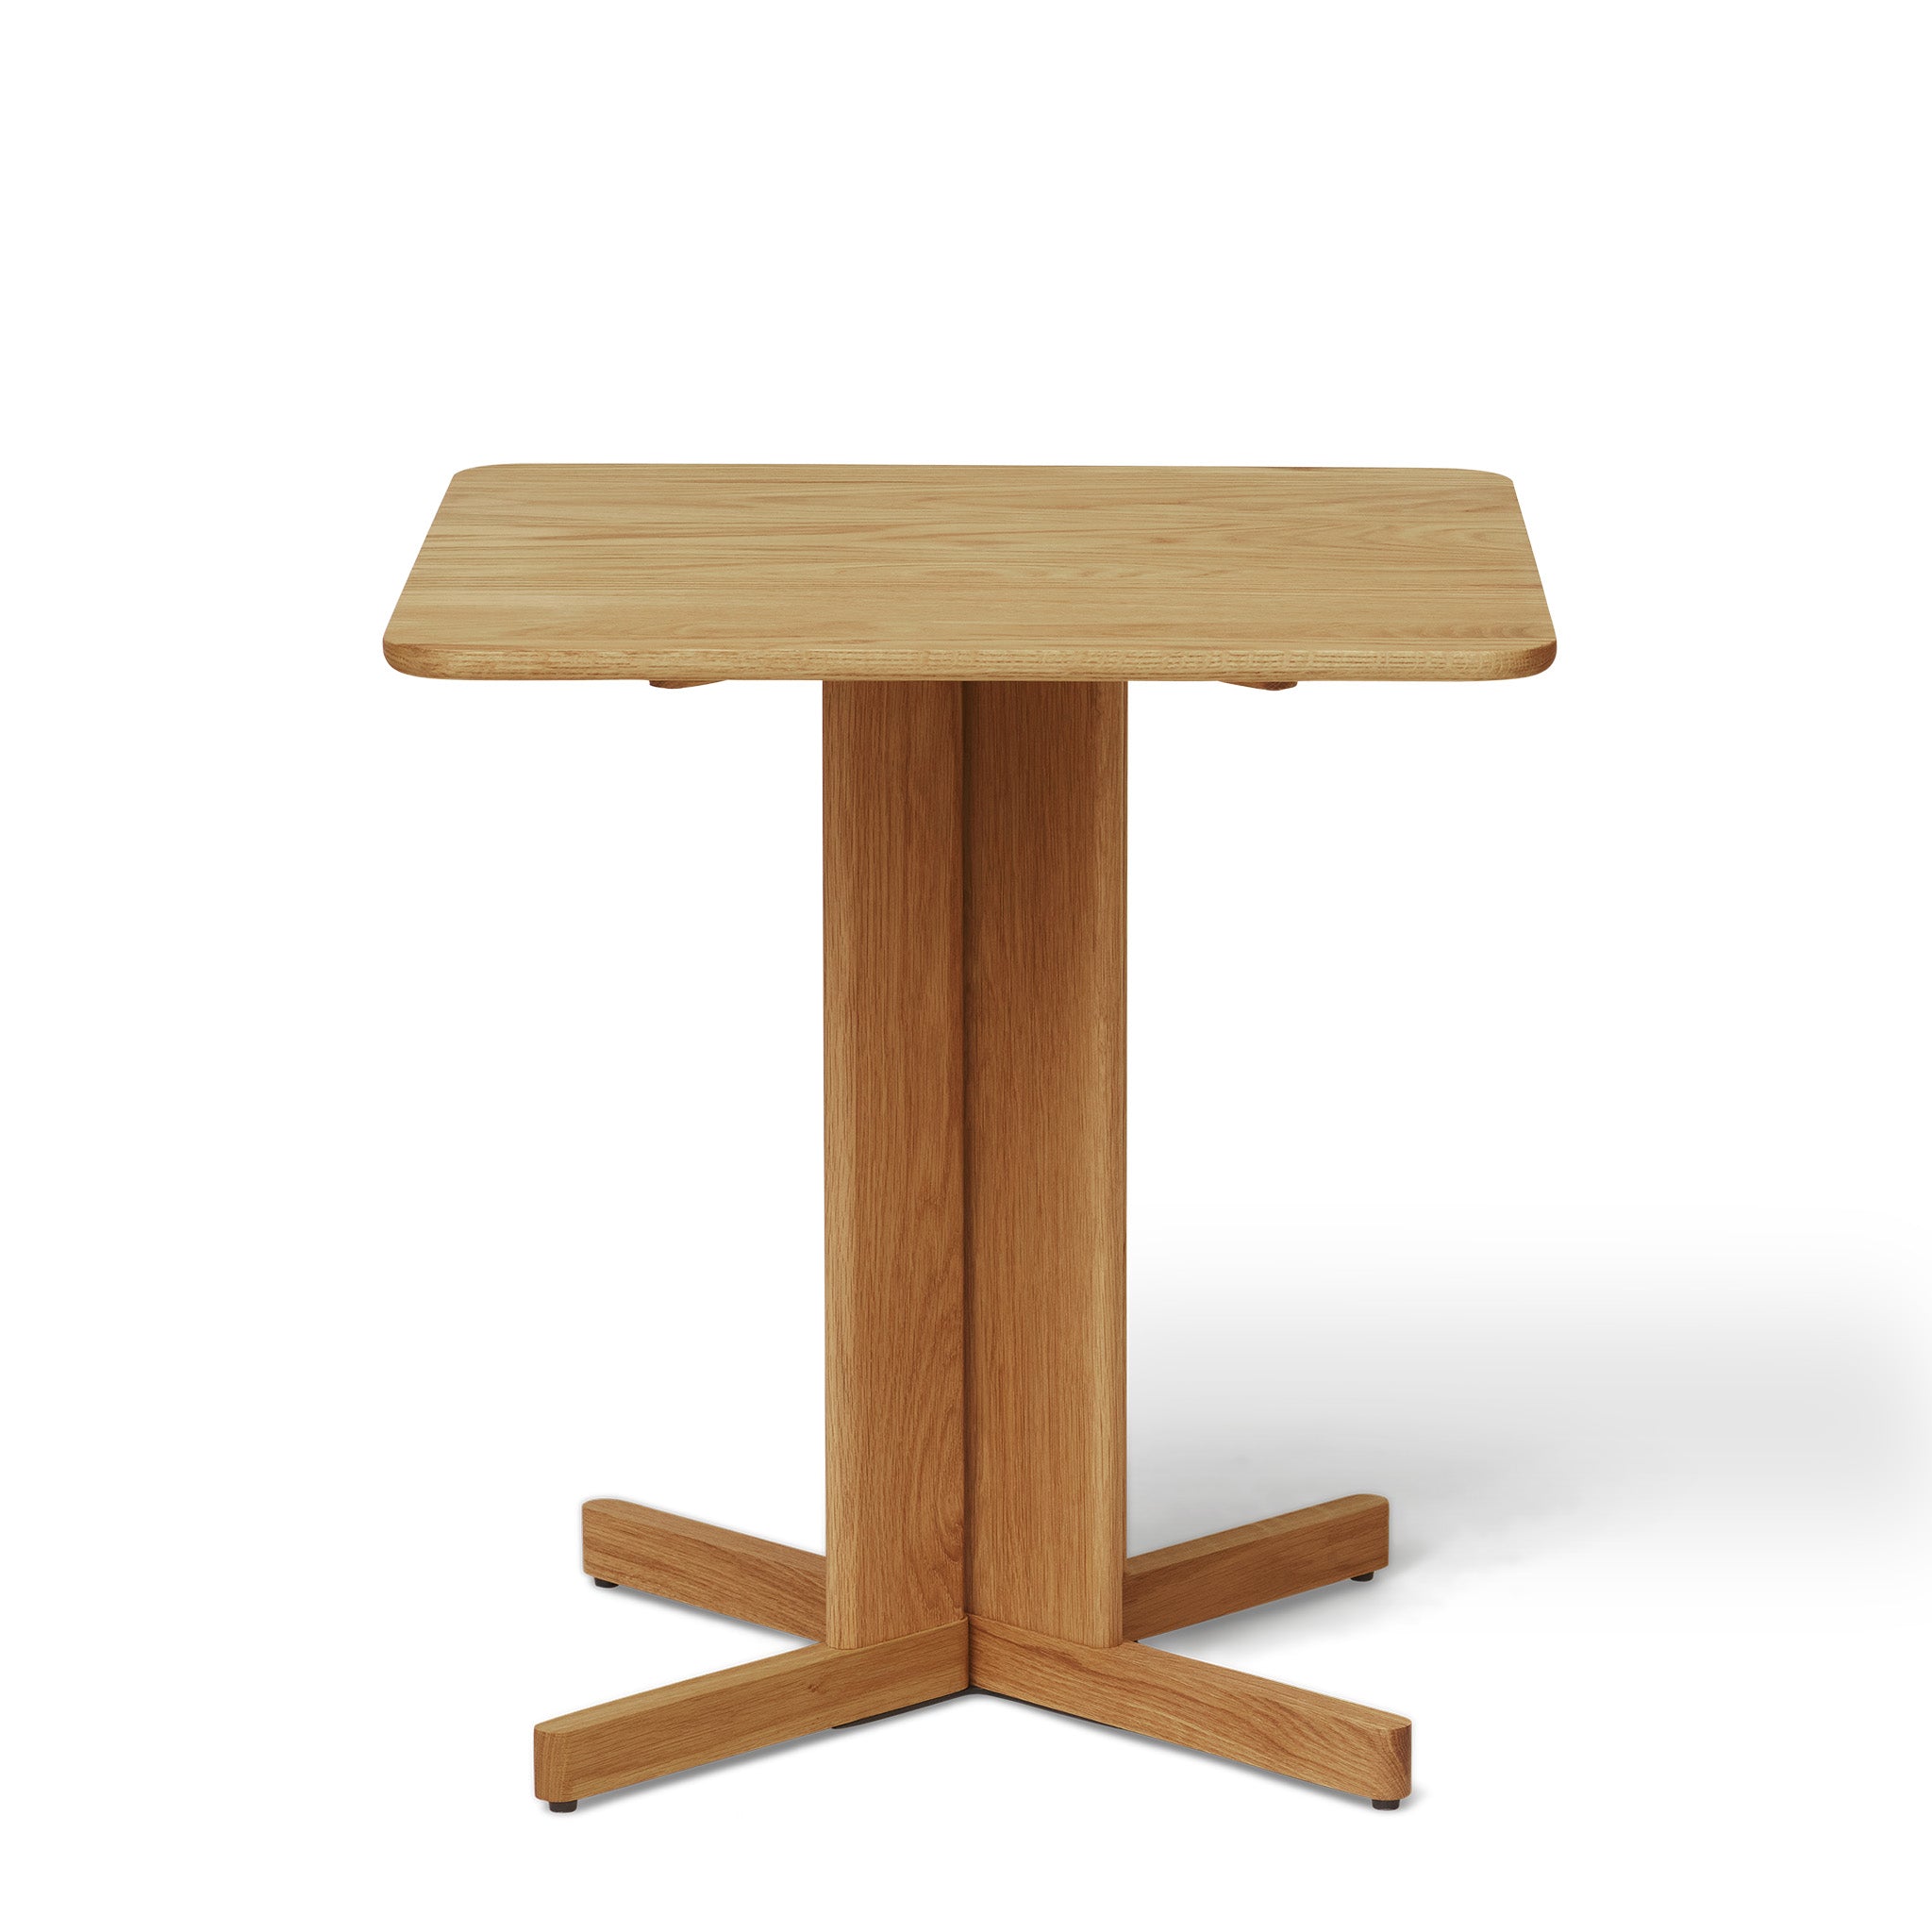 Quatrefoil Square Table 68cm by Form and Refine